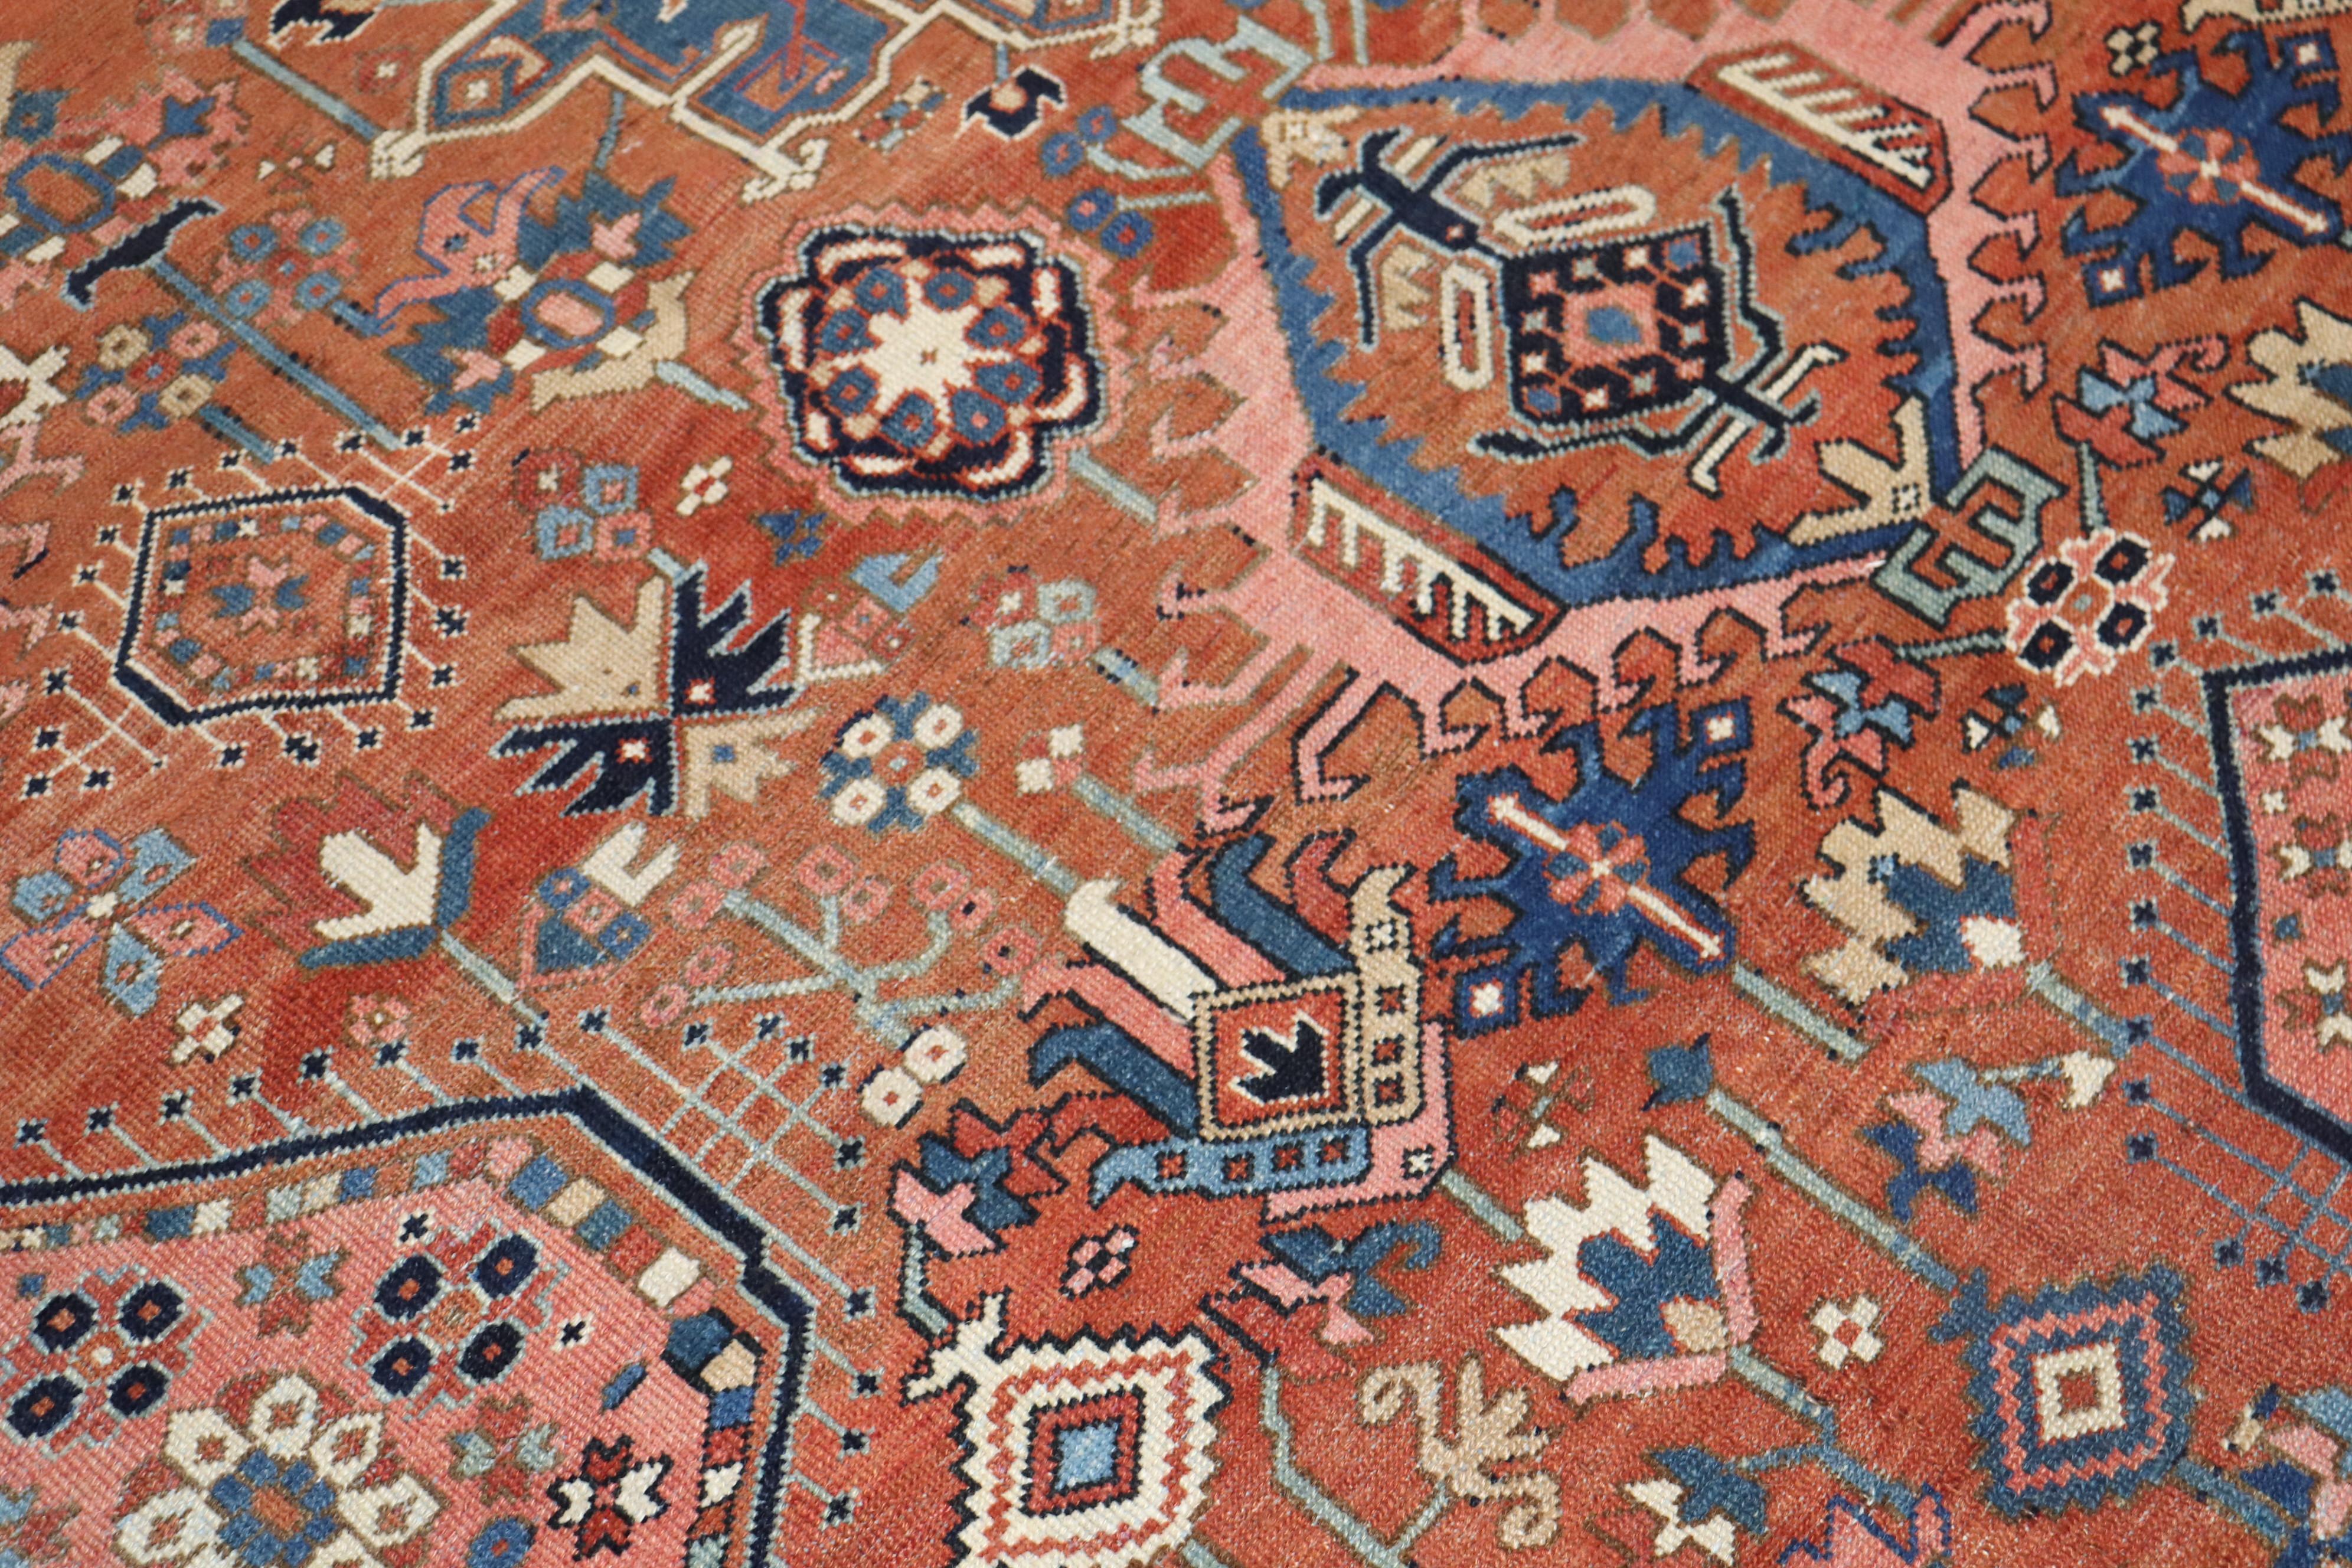 Rustic Geometric Antique Persian Heriz Karadja Carpet, Early 20th Century 5